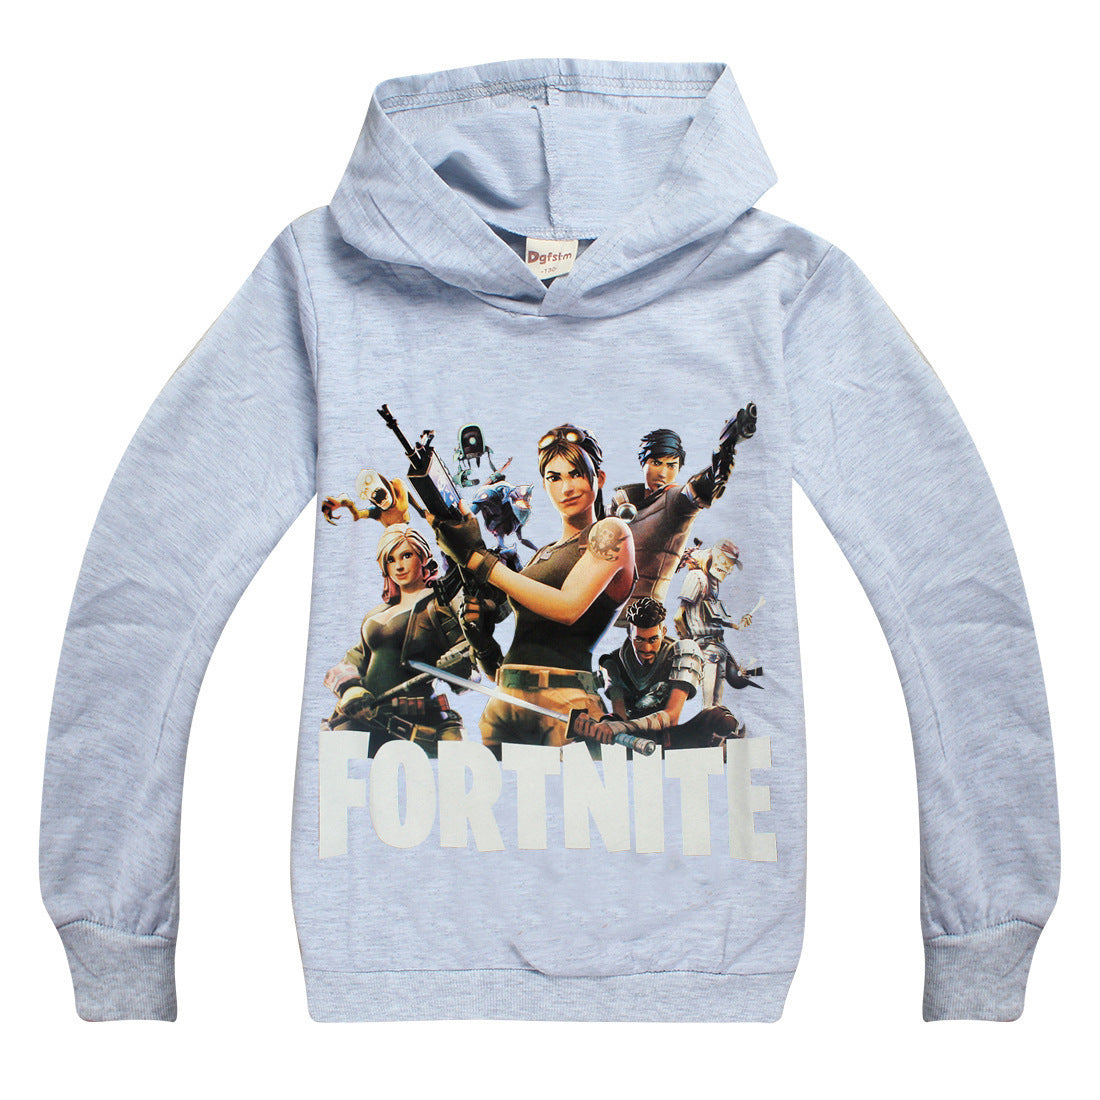 Boy Shirts Roblox Tissino - buy kk jim unisex 3d printing roblox hoodies cartoon hooded tops